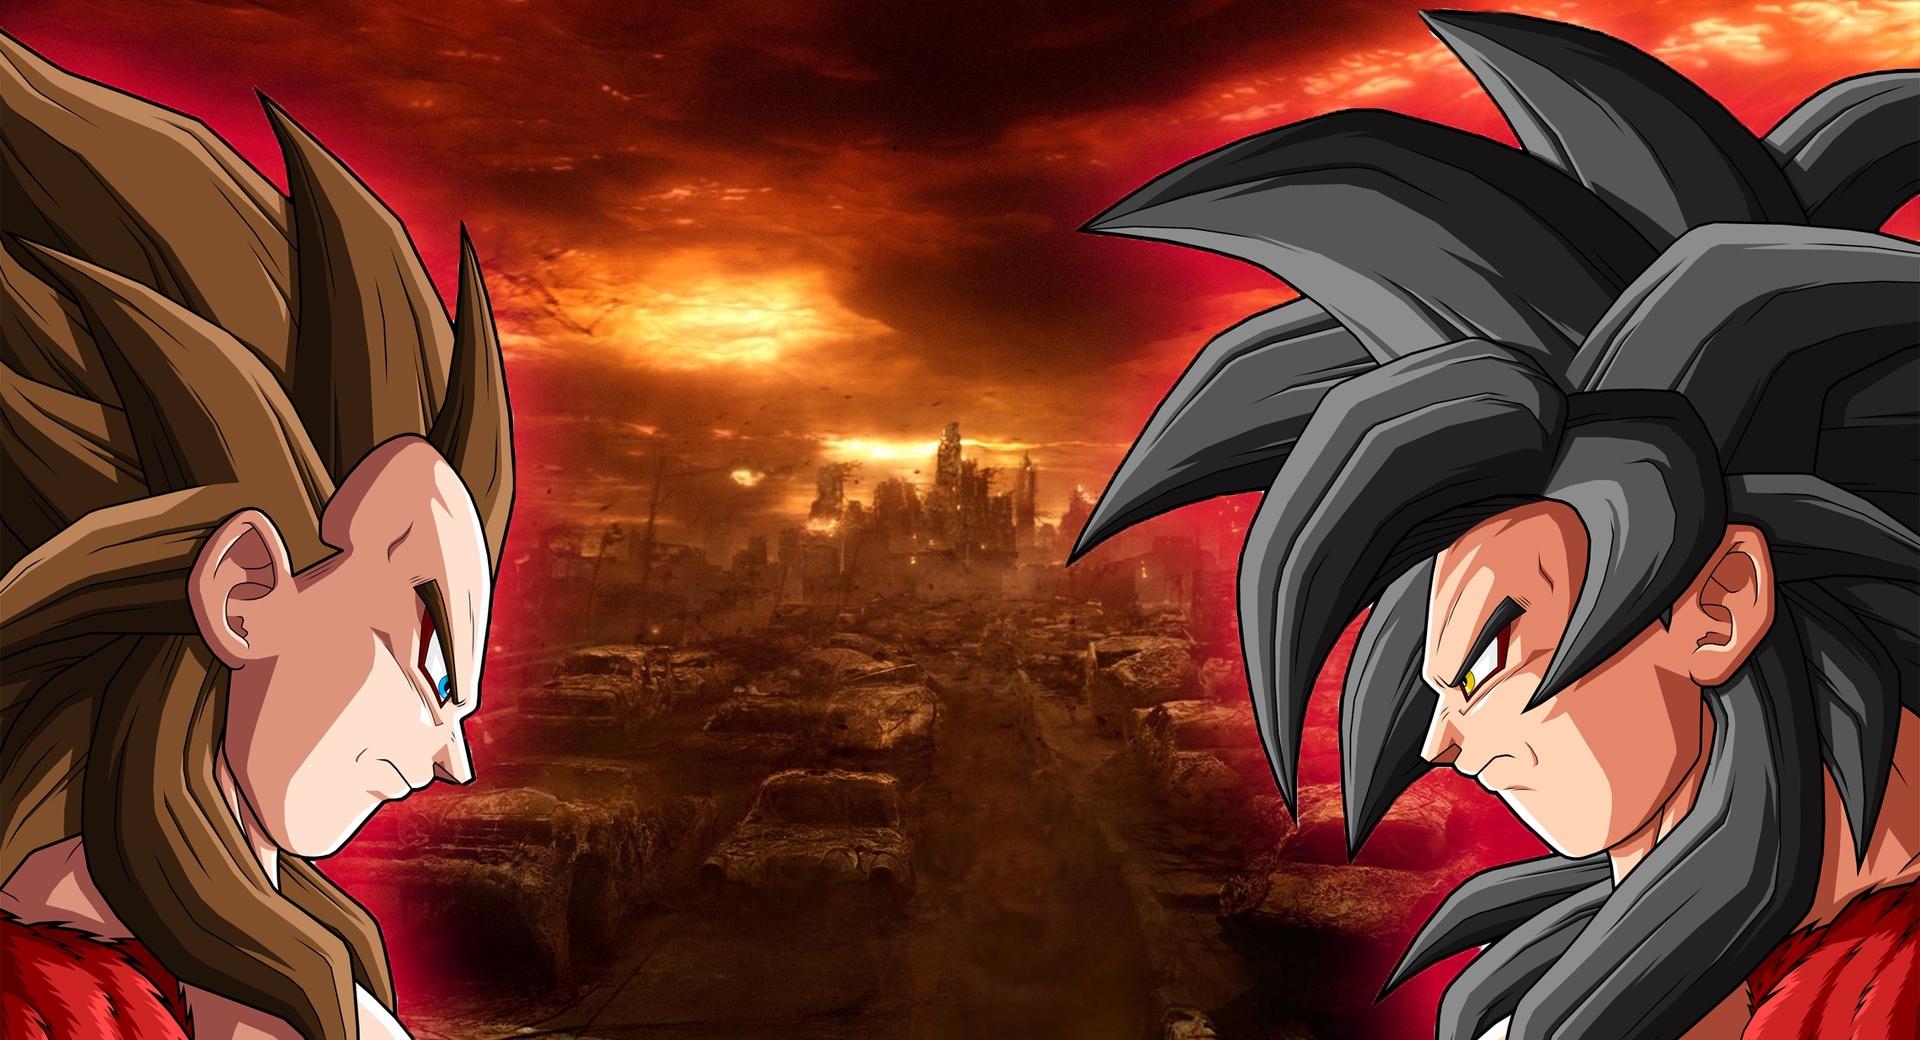 DBZ SS4 Goku vs Vegeta at 320 x 480 iPhone size wallpapers HD quality